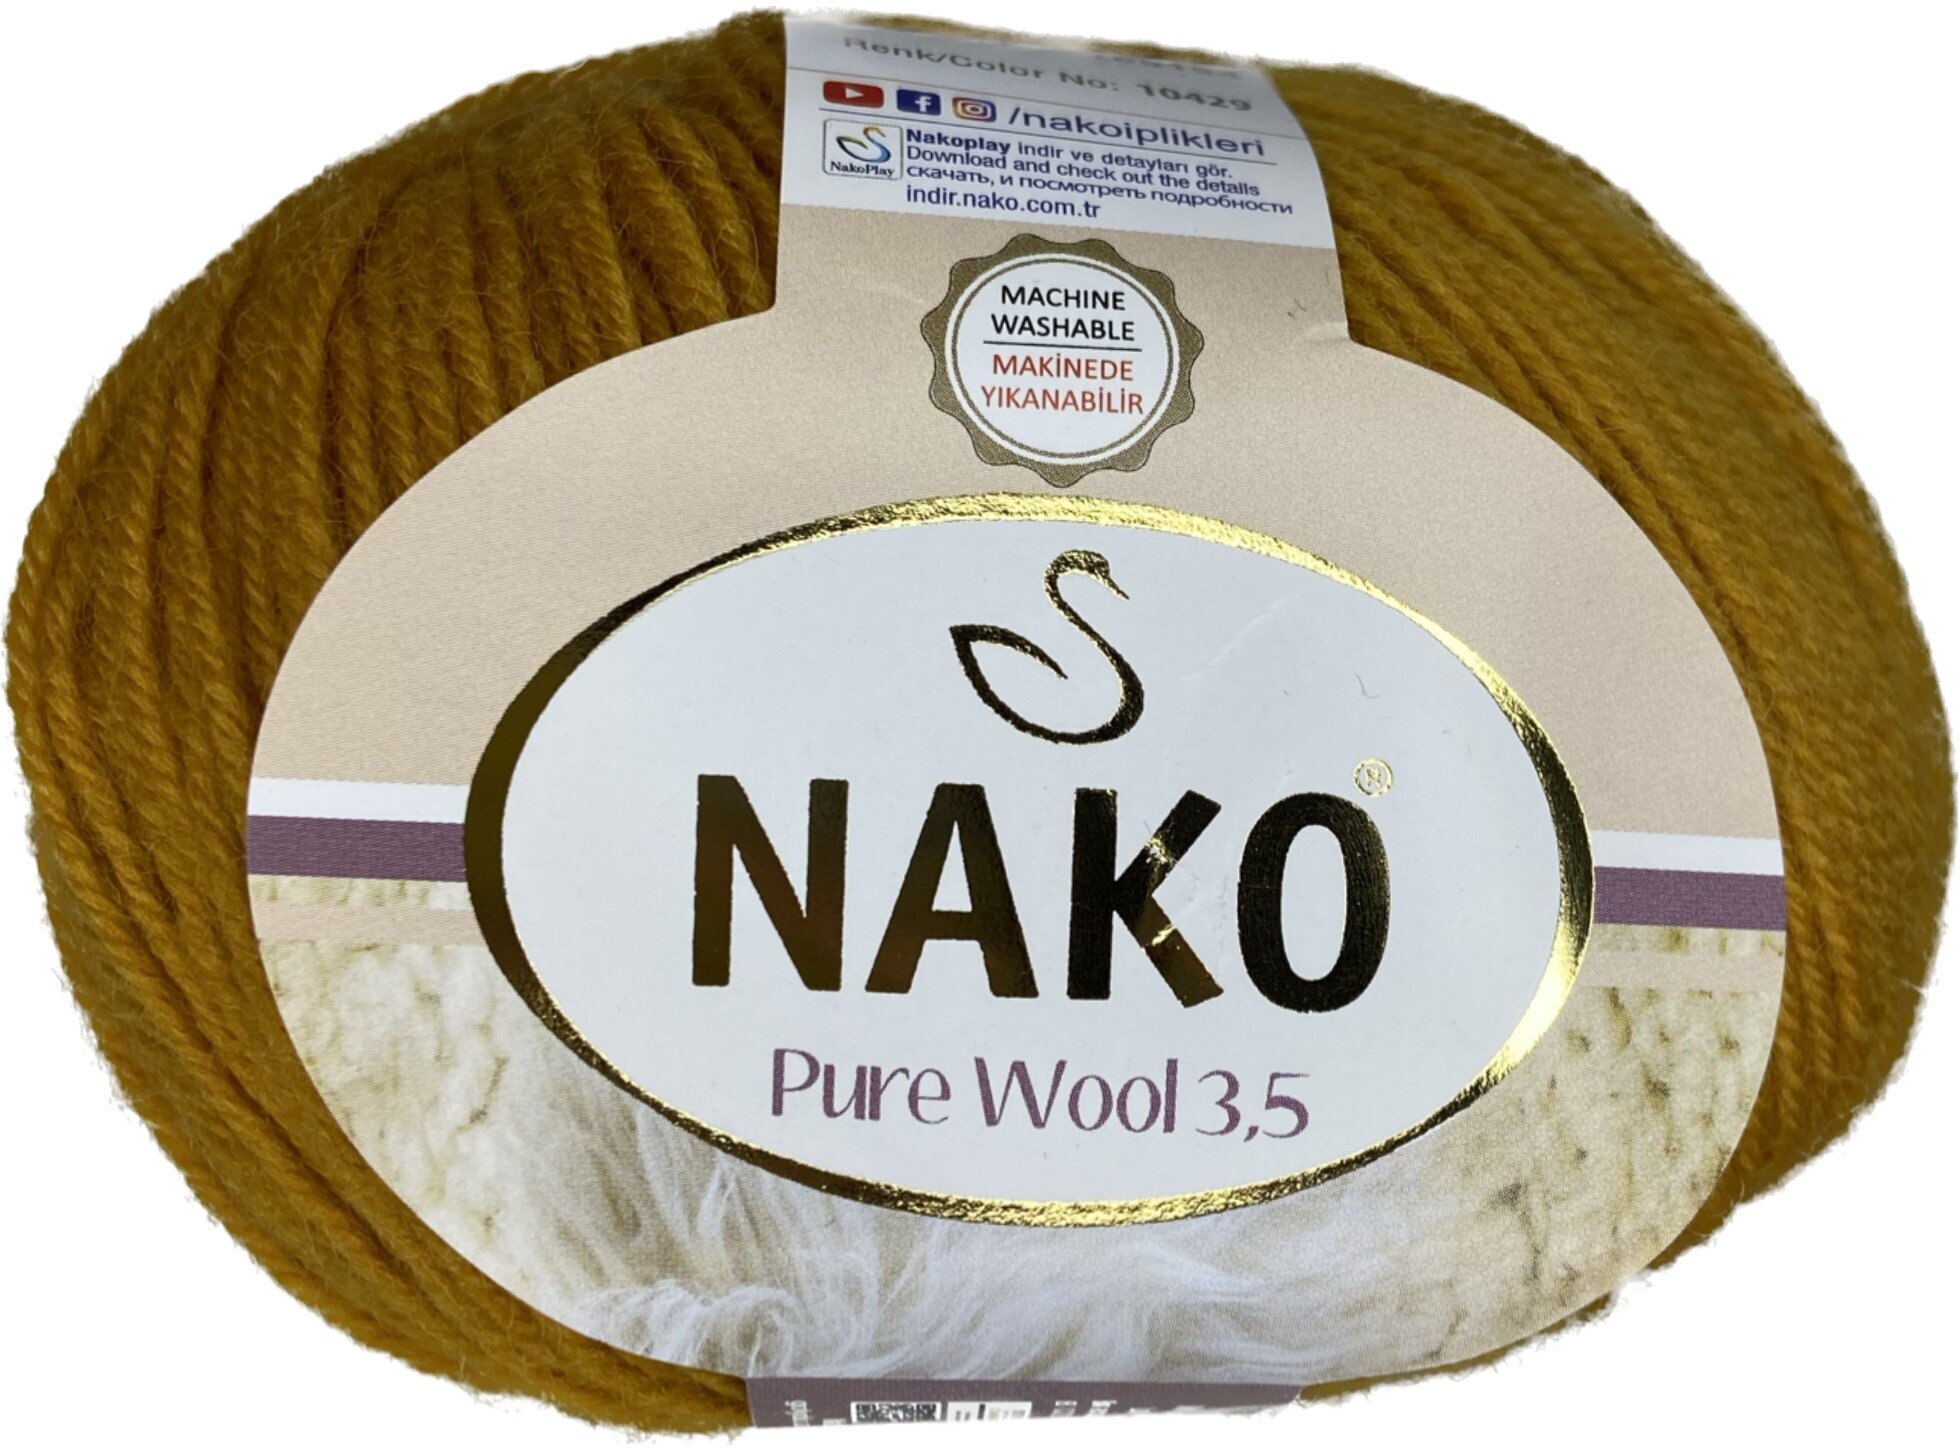 Nako pure wool 3.5 color 10429